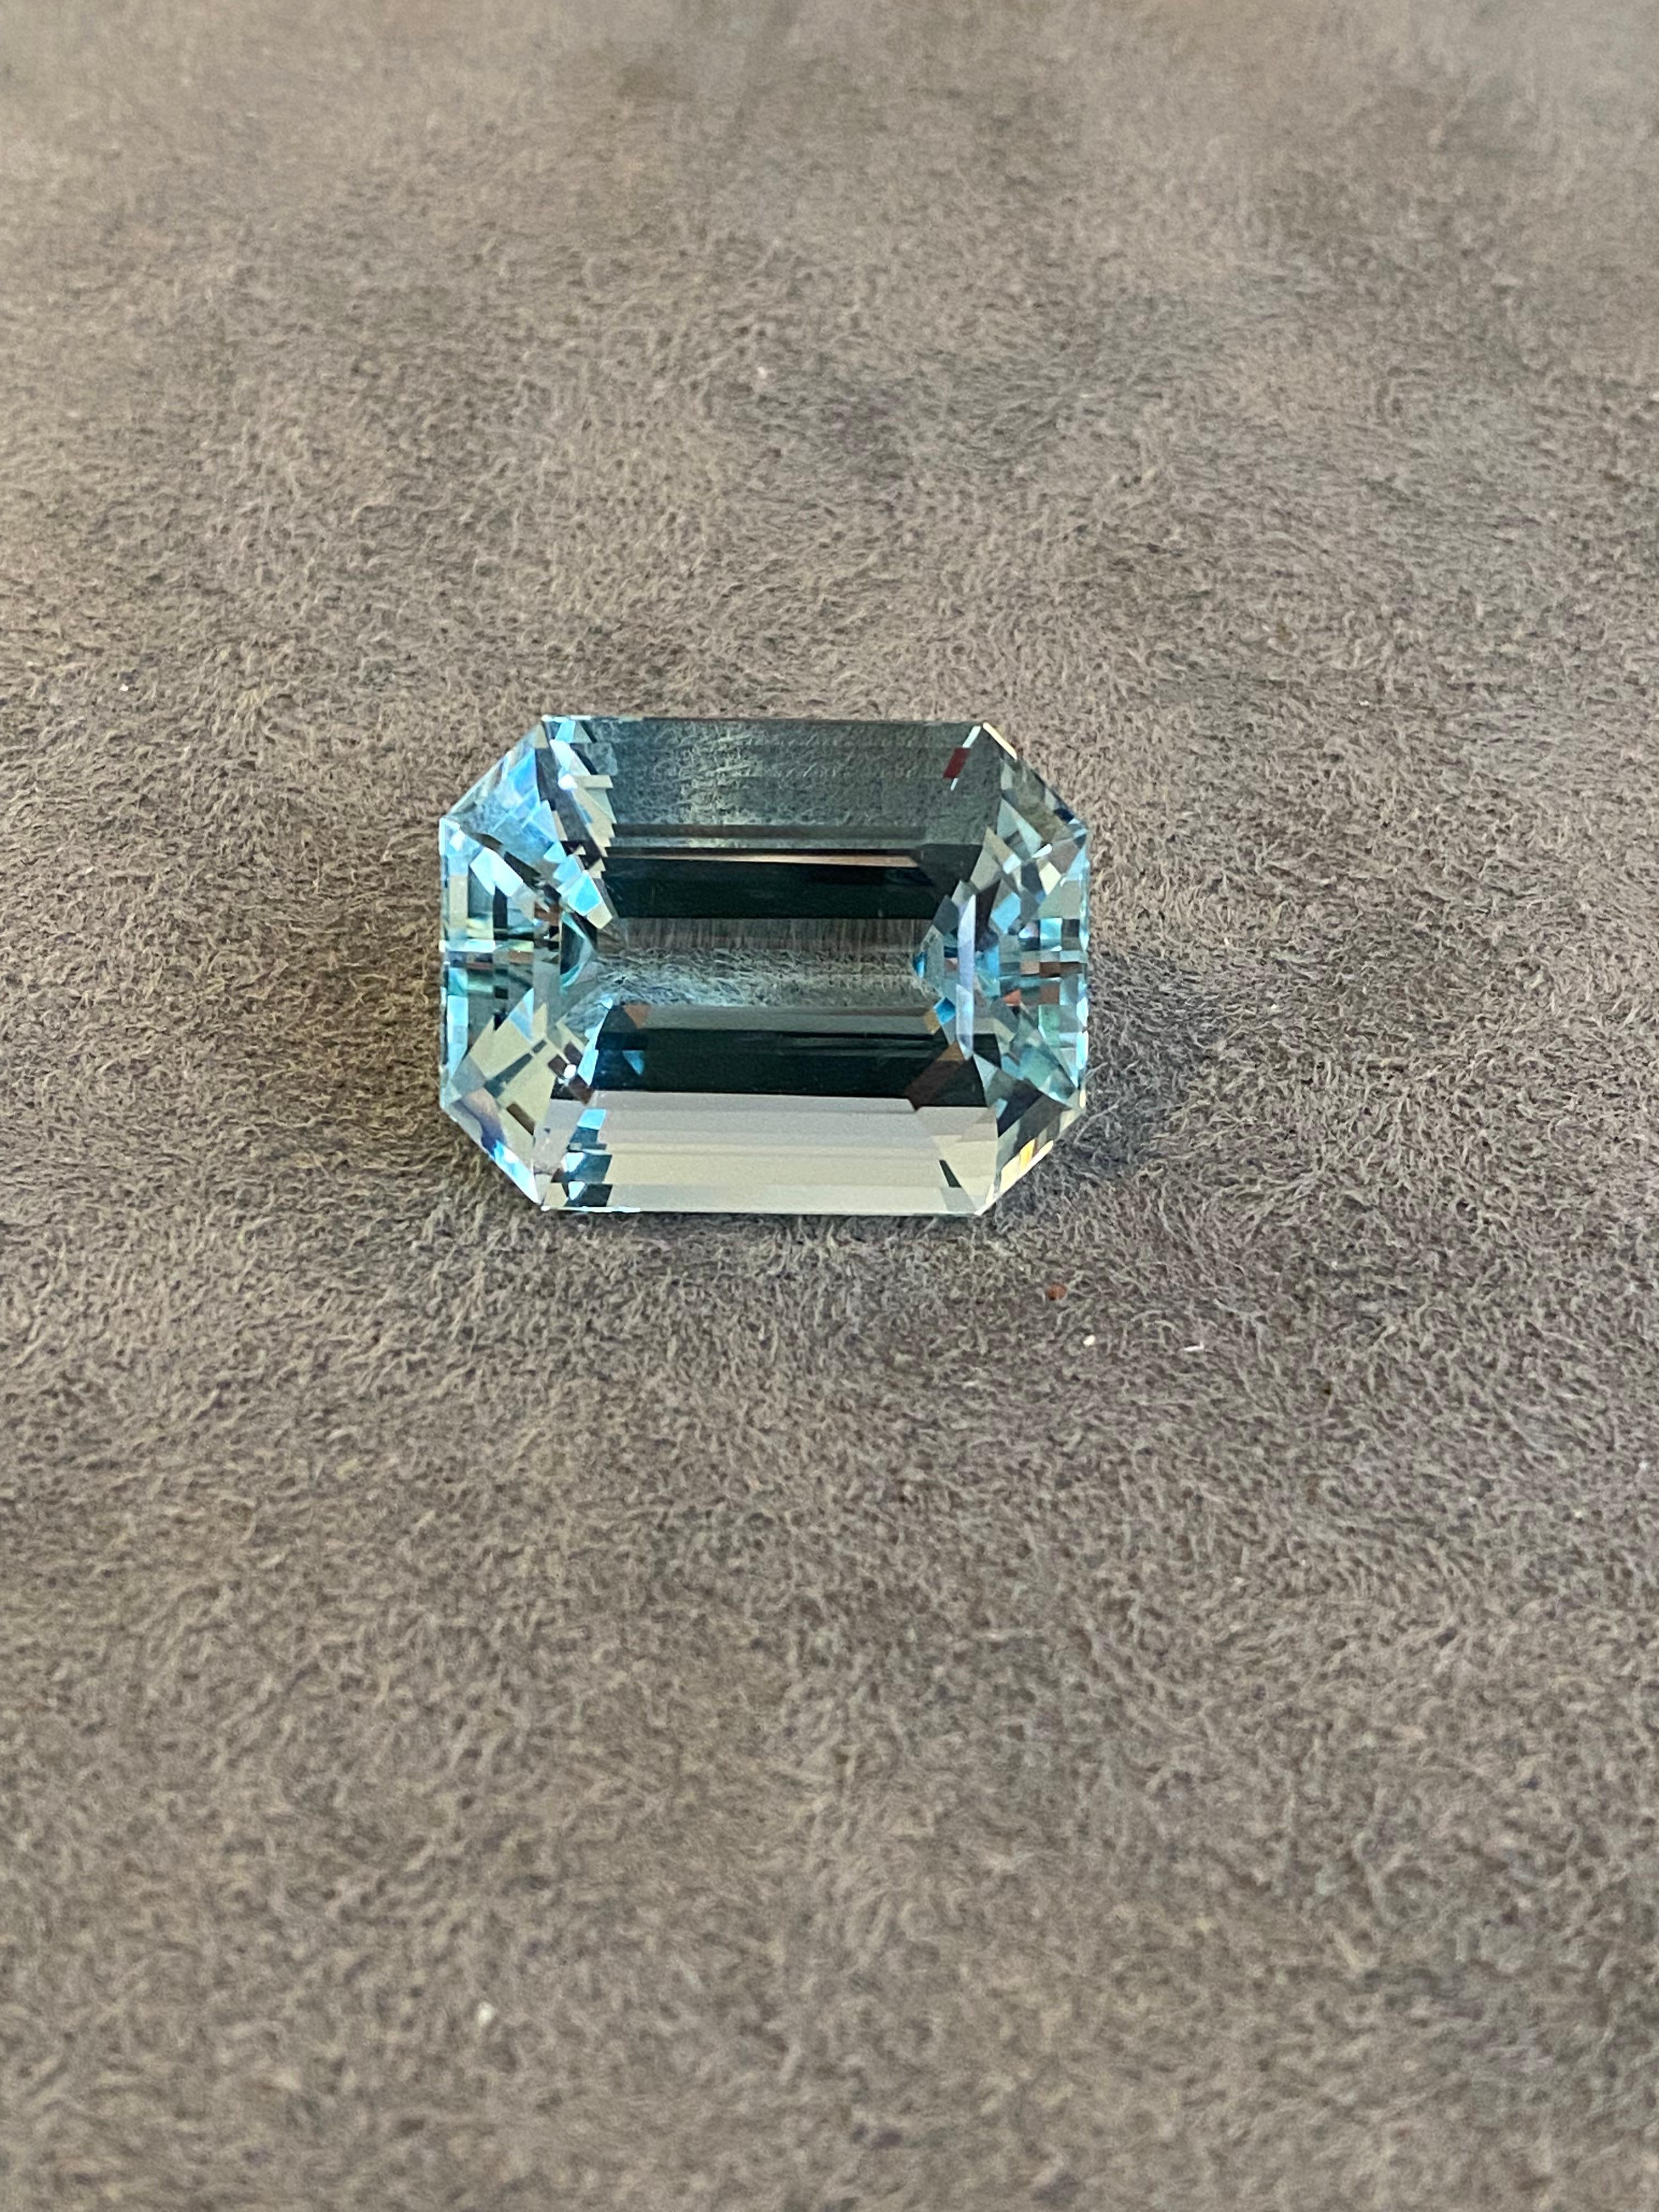 Emerald Cut Aquamarine 49.54ct For Sale